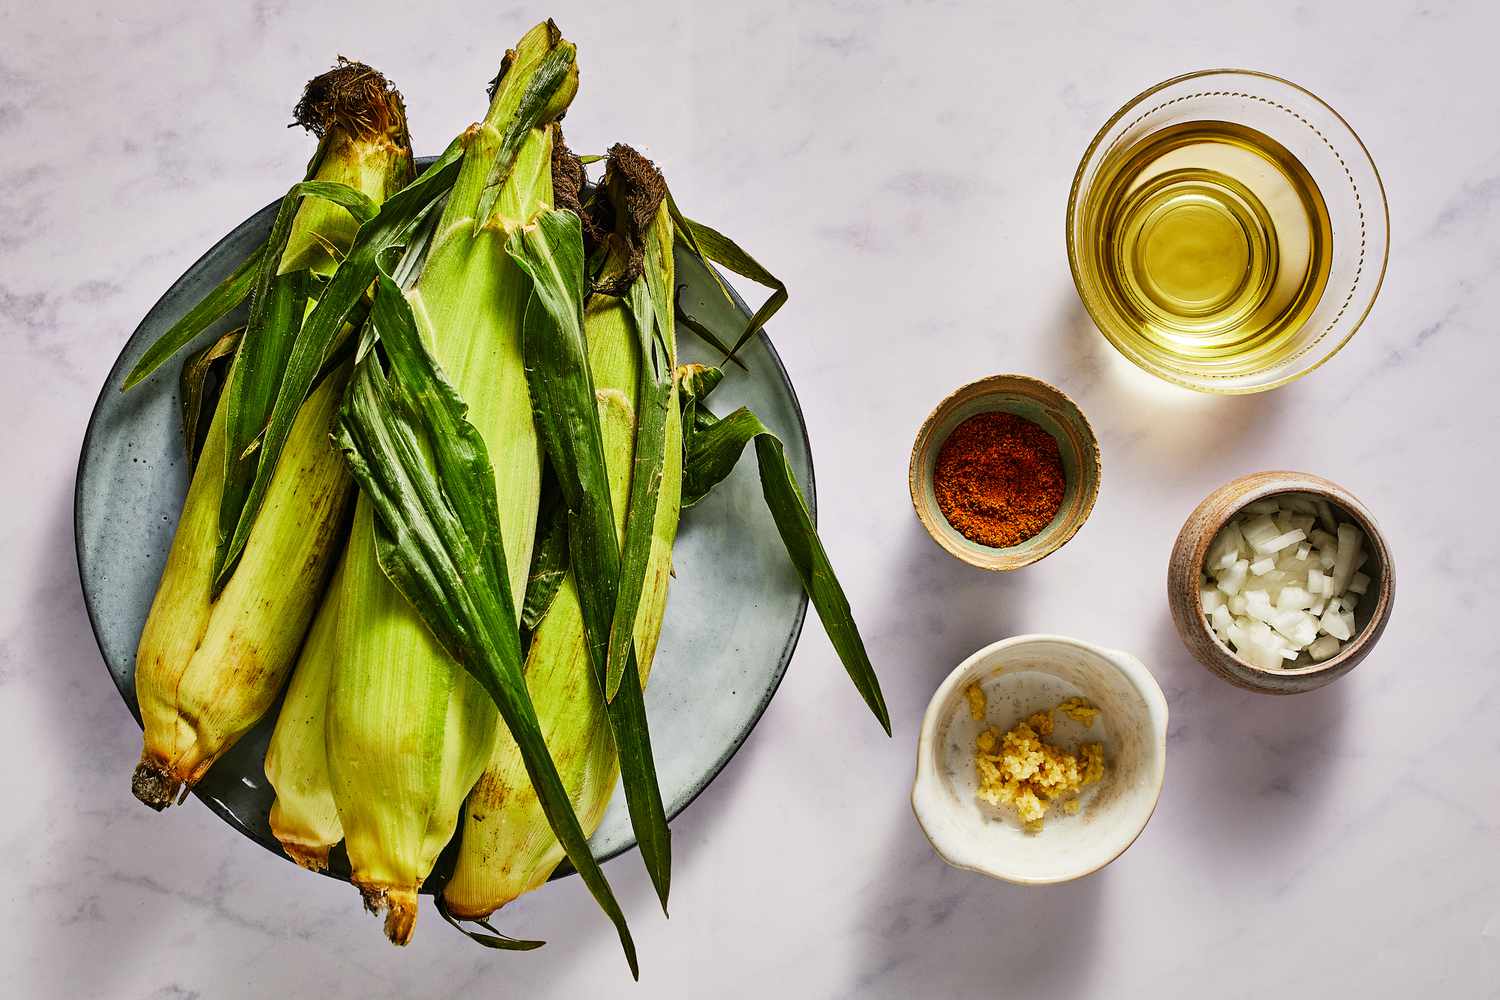 Ingredients to make cajun-style corn on the cob